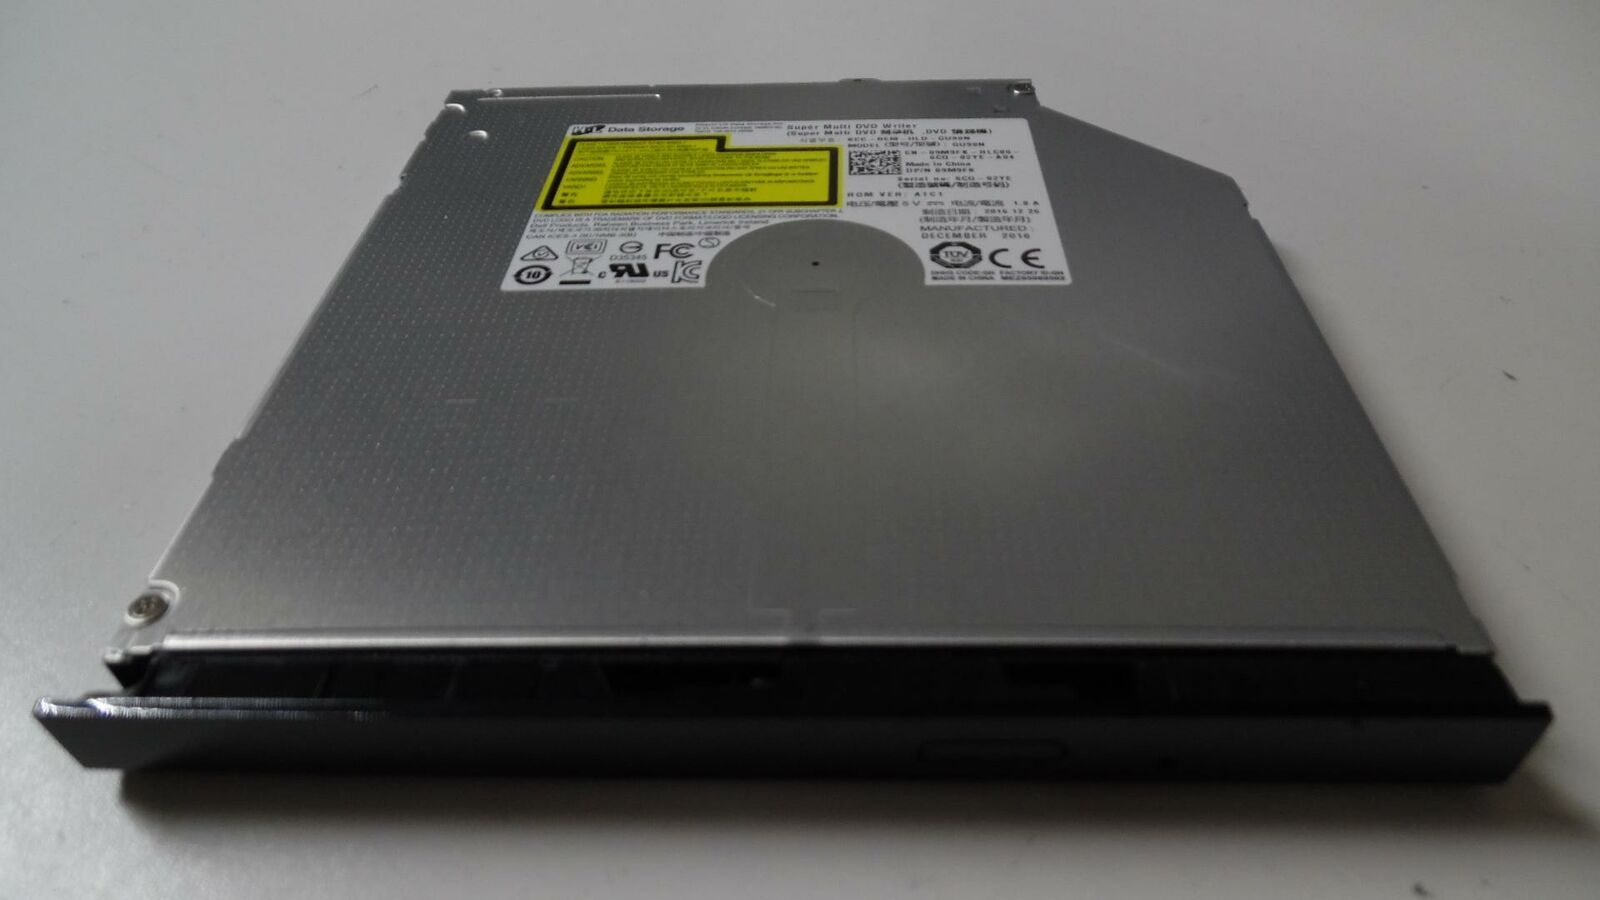 Genuine CD/DVD±RW Optical Drive for Dell Inspiron 15 3567 - GU90N - Tested